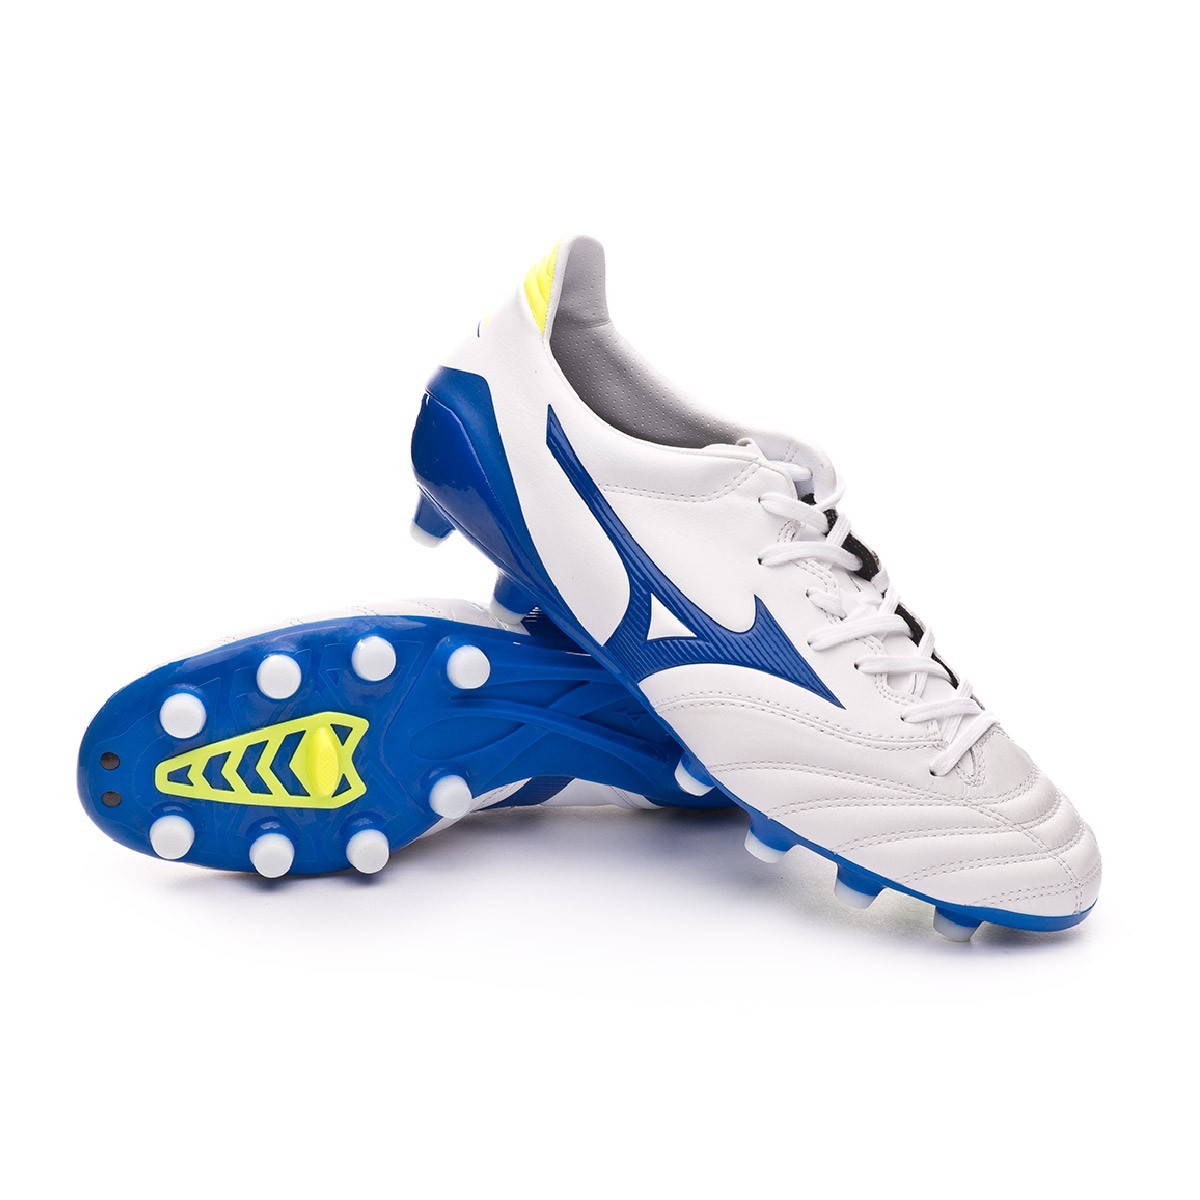 Football Boots Mizuno Morelia Neo KL II White-Wave cup blue-Safety yellow -  Football store Fútbol Emotion